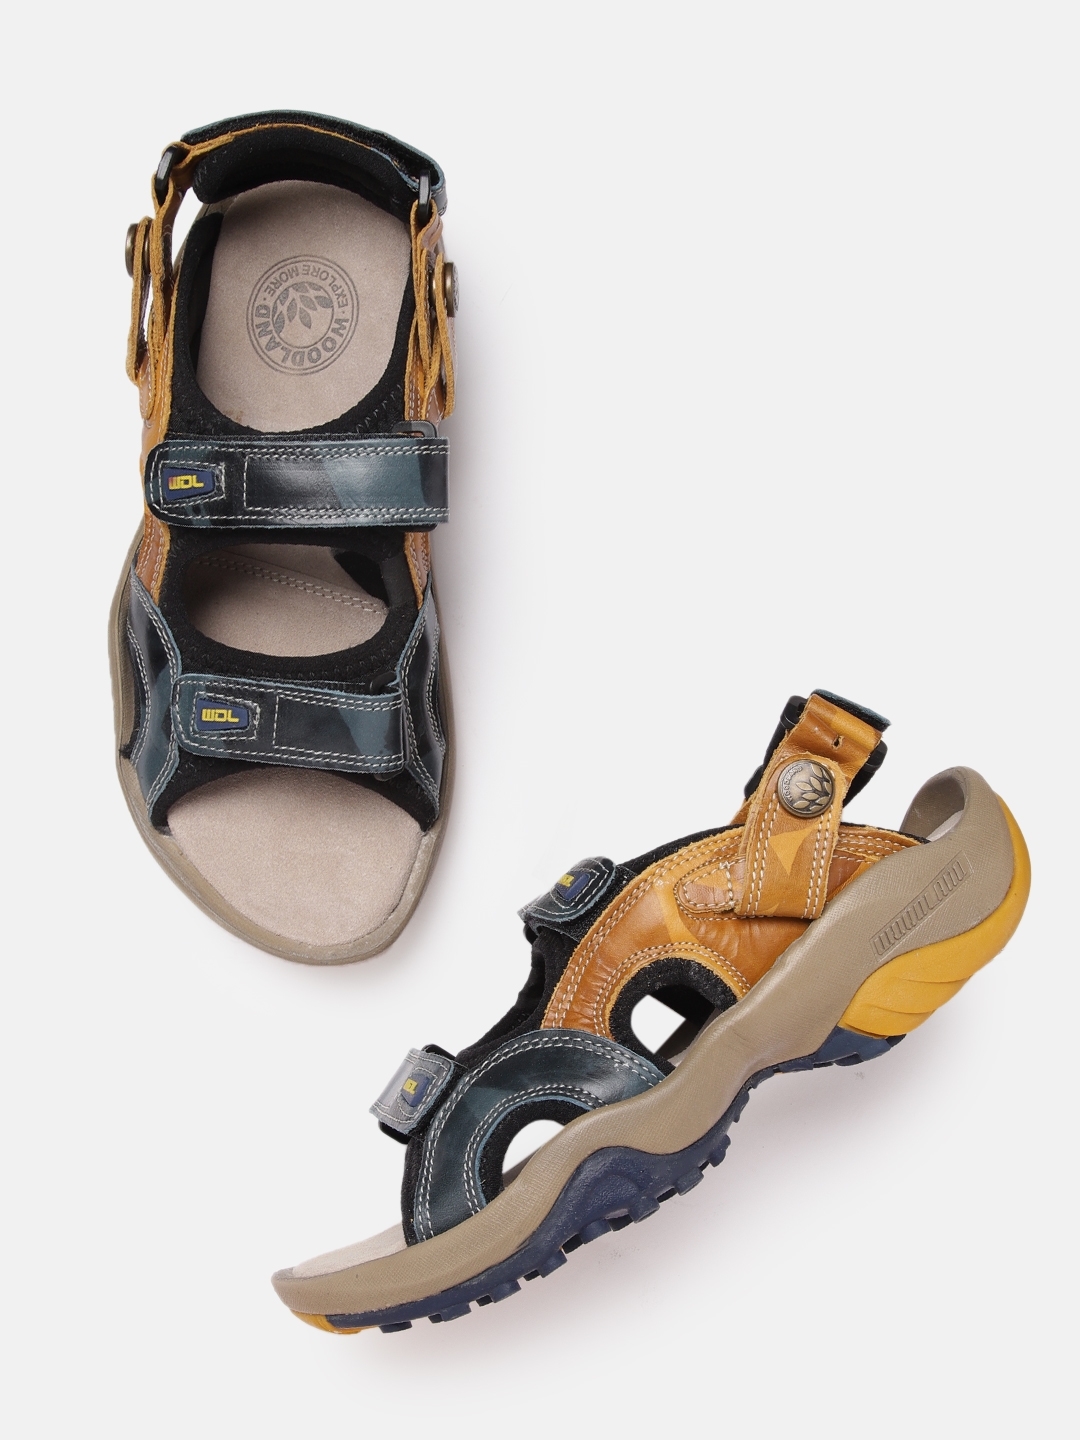 Buy Men Khaki & Olive Green Nubuck Solid Comfort Sandals with Colourblocked  Detail online | Looksgud.in